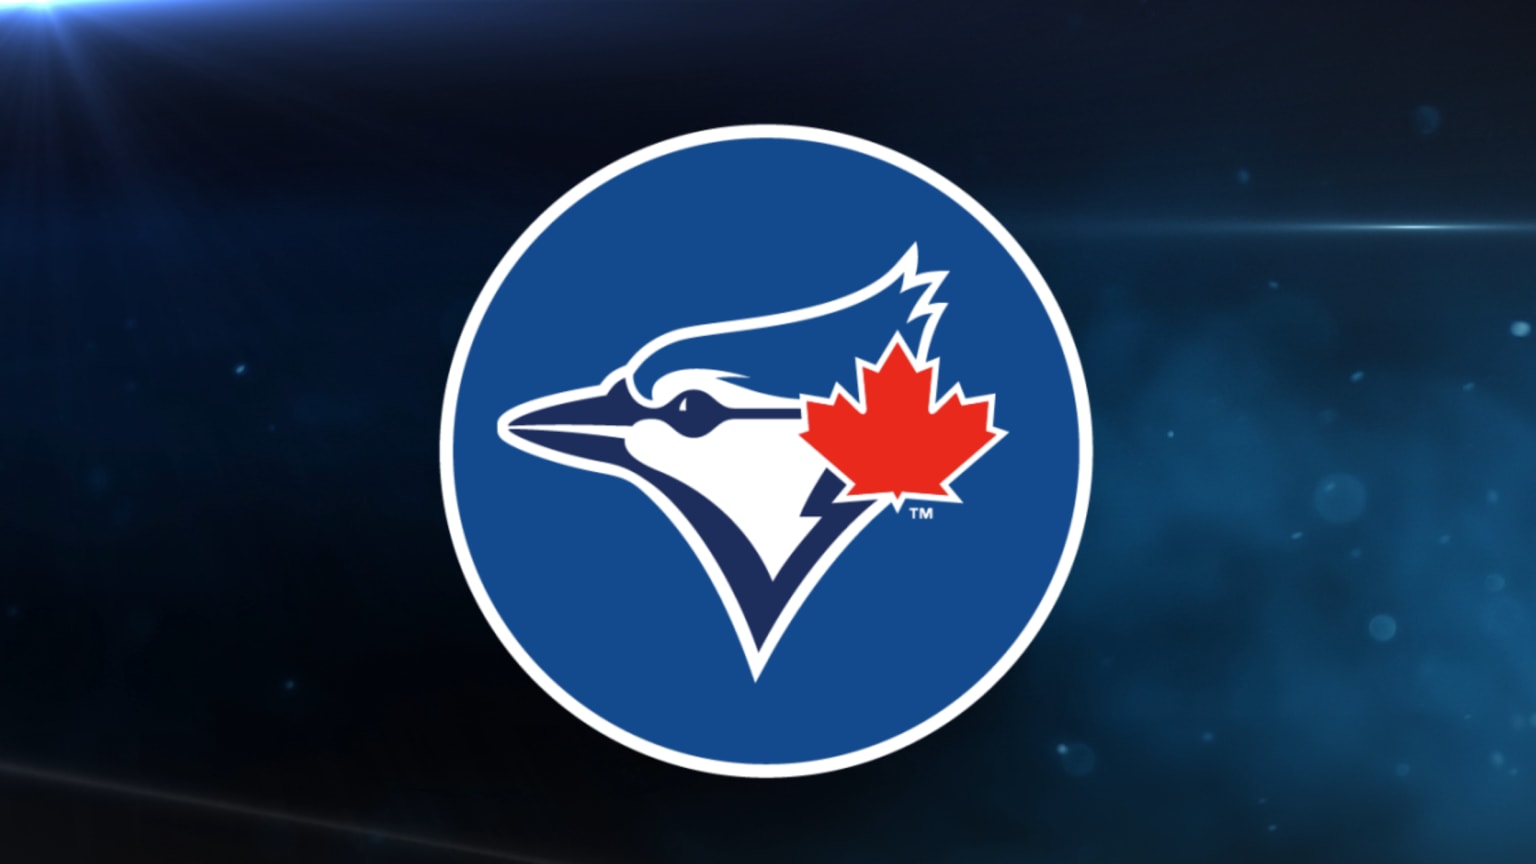 Toronto Blue Jays vs. St. Louis Cardinals 3/30/23 - MLB Live